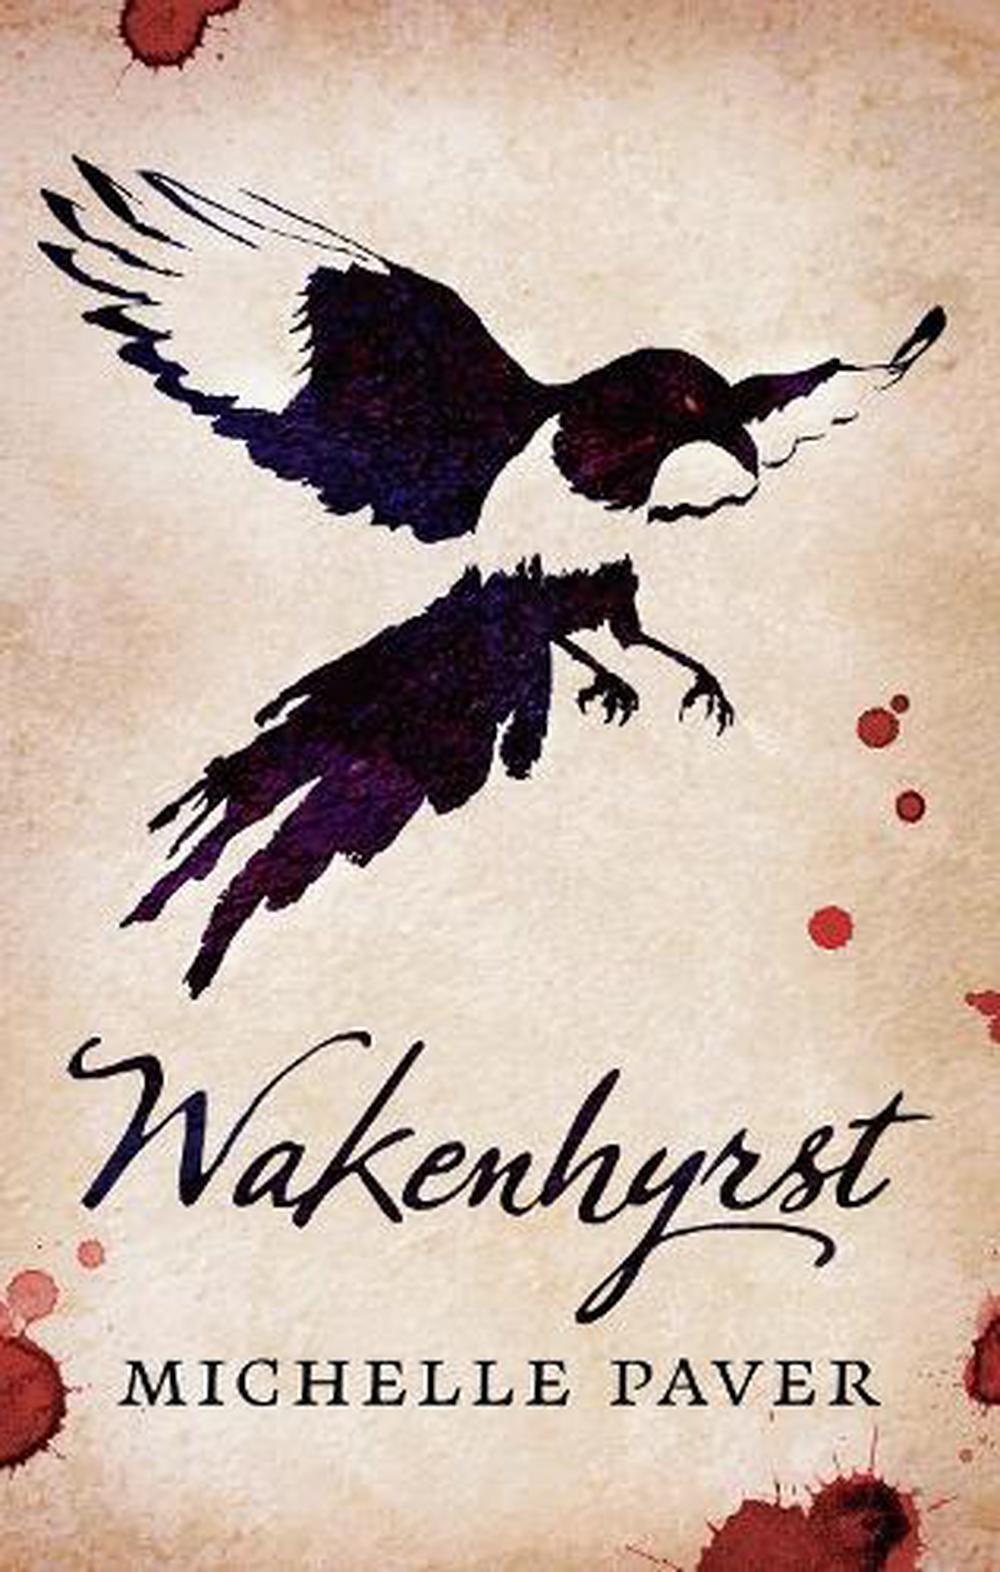 wakenhyrst book review